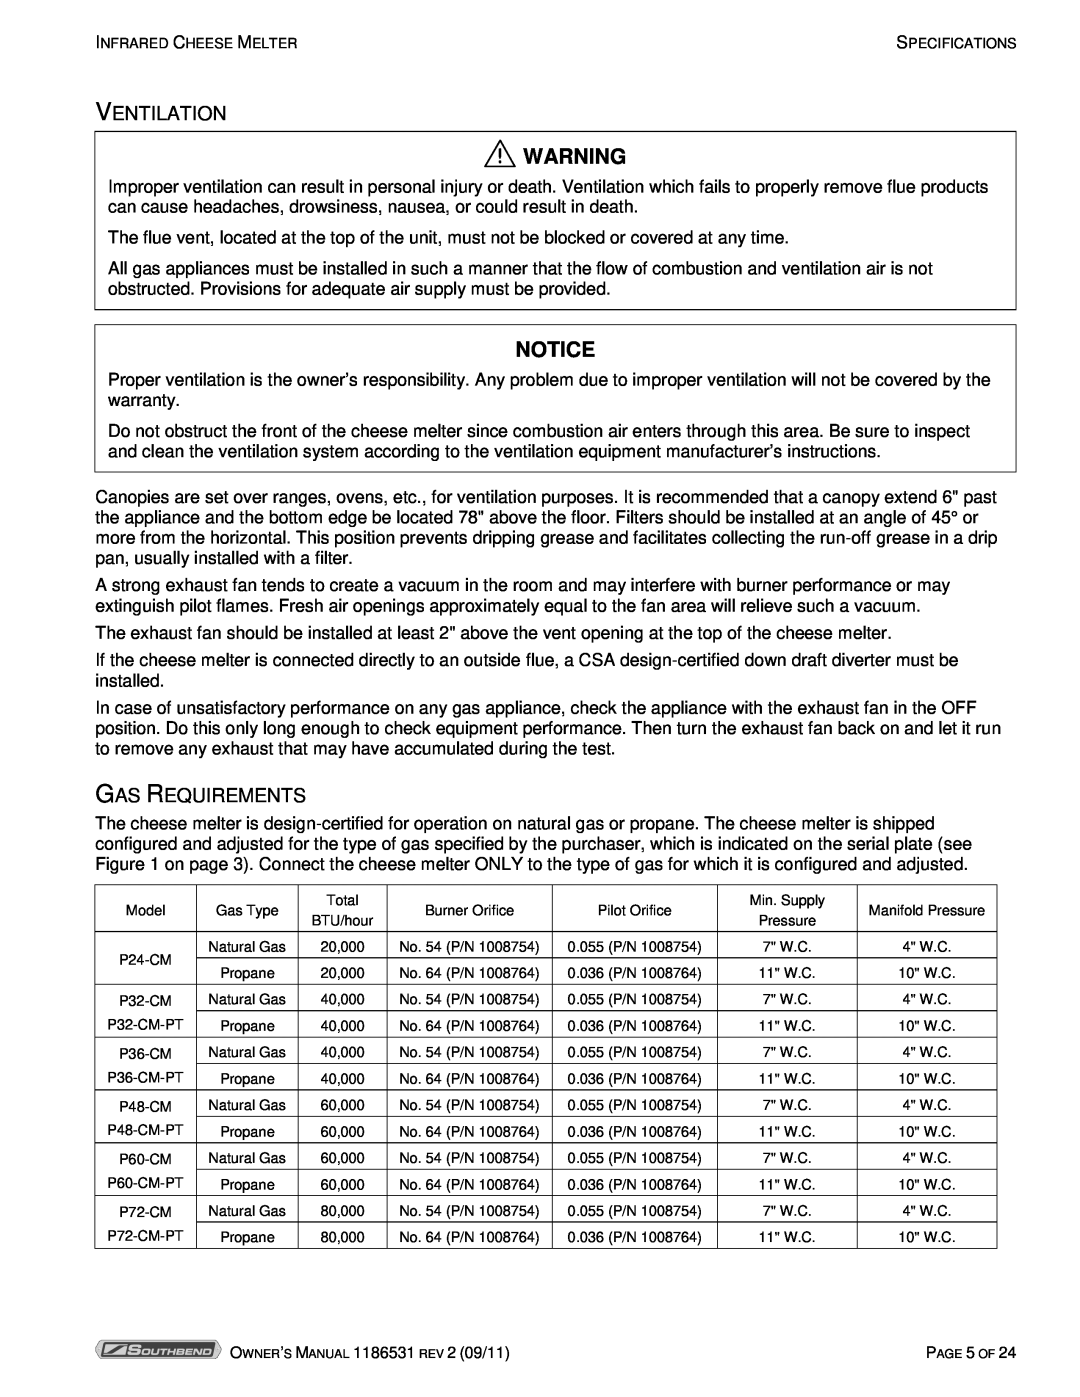 Southbend P24-CM manual Ventilation, Gas Requirements 